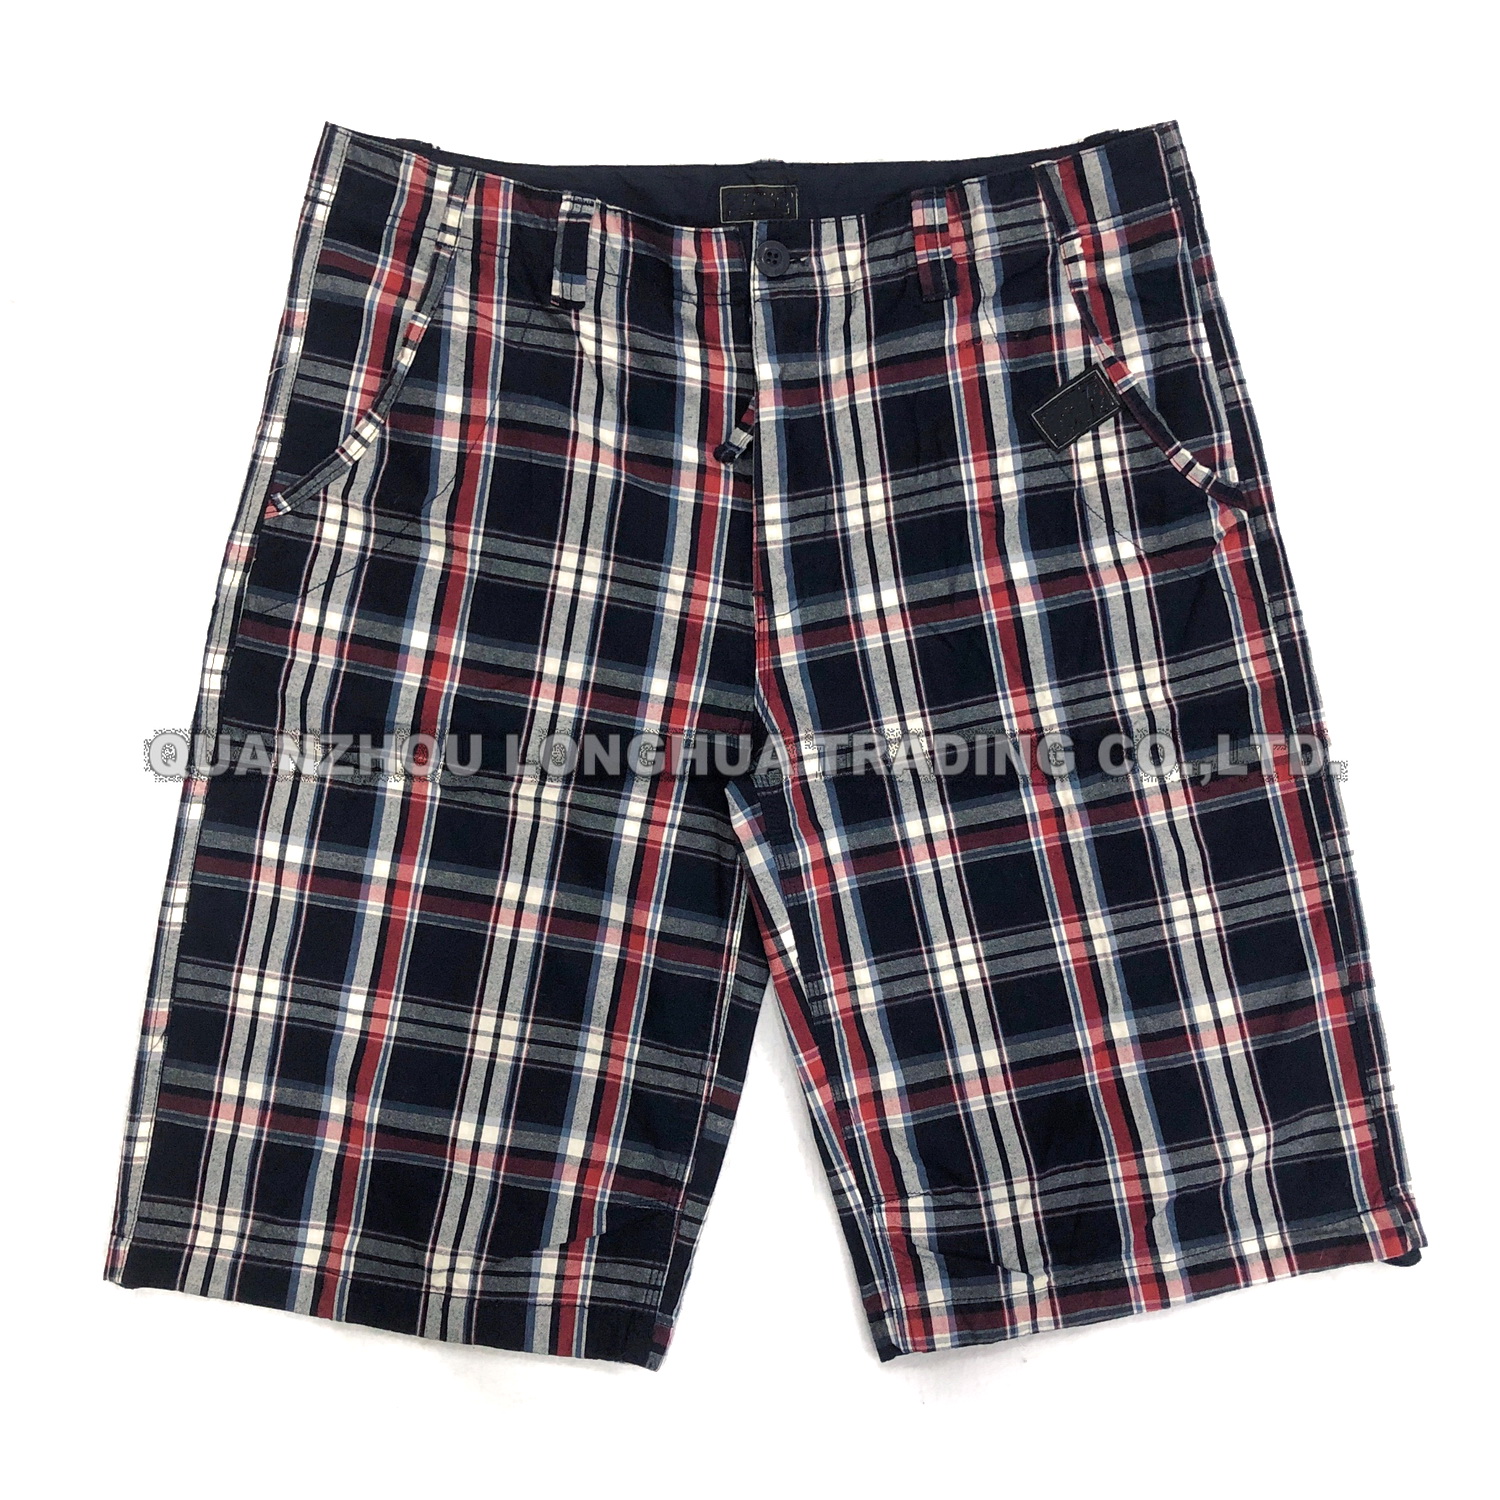 Men′s Boy′s Cargo Shorts Pants Apparel Trousers Plaid Printing Cotton Enzym Wash